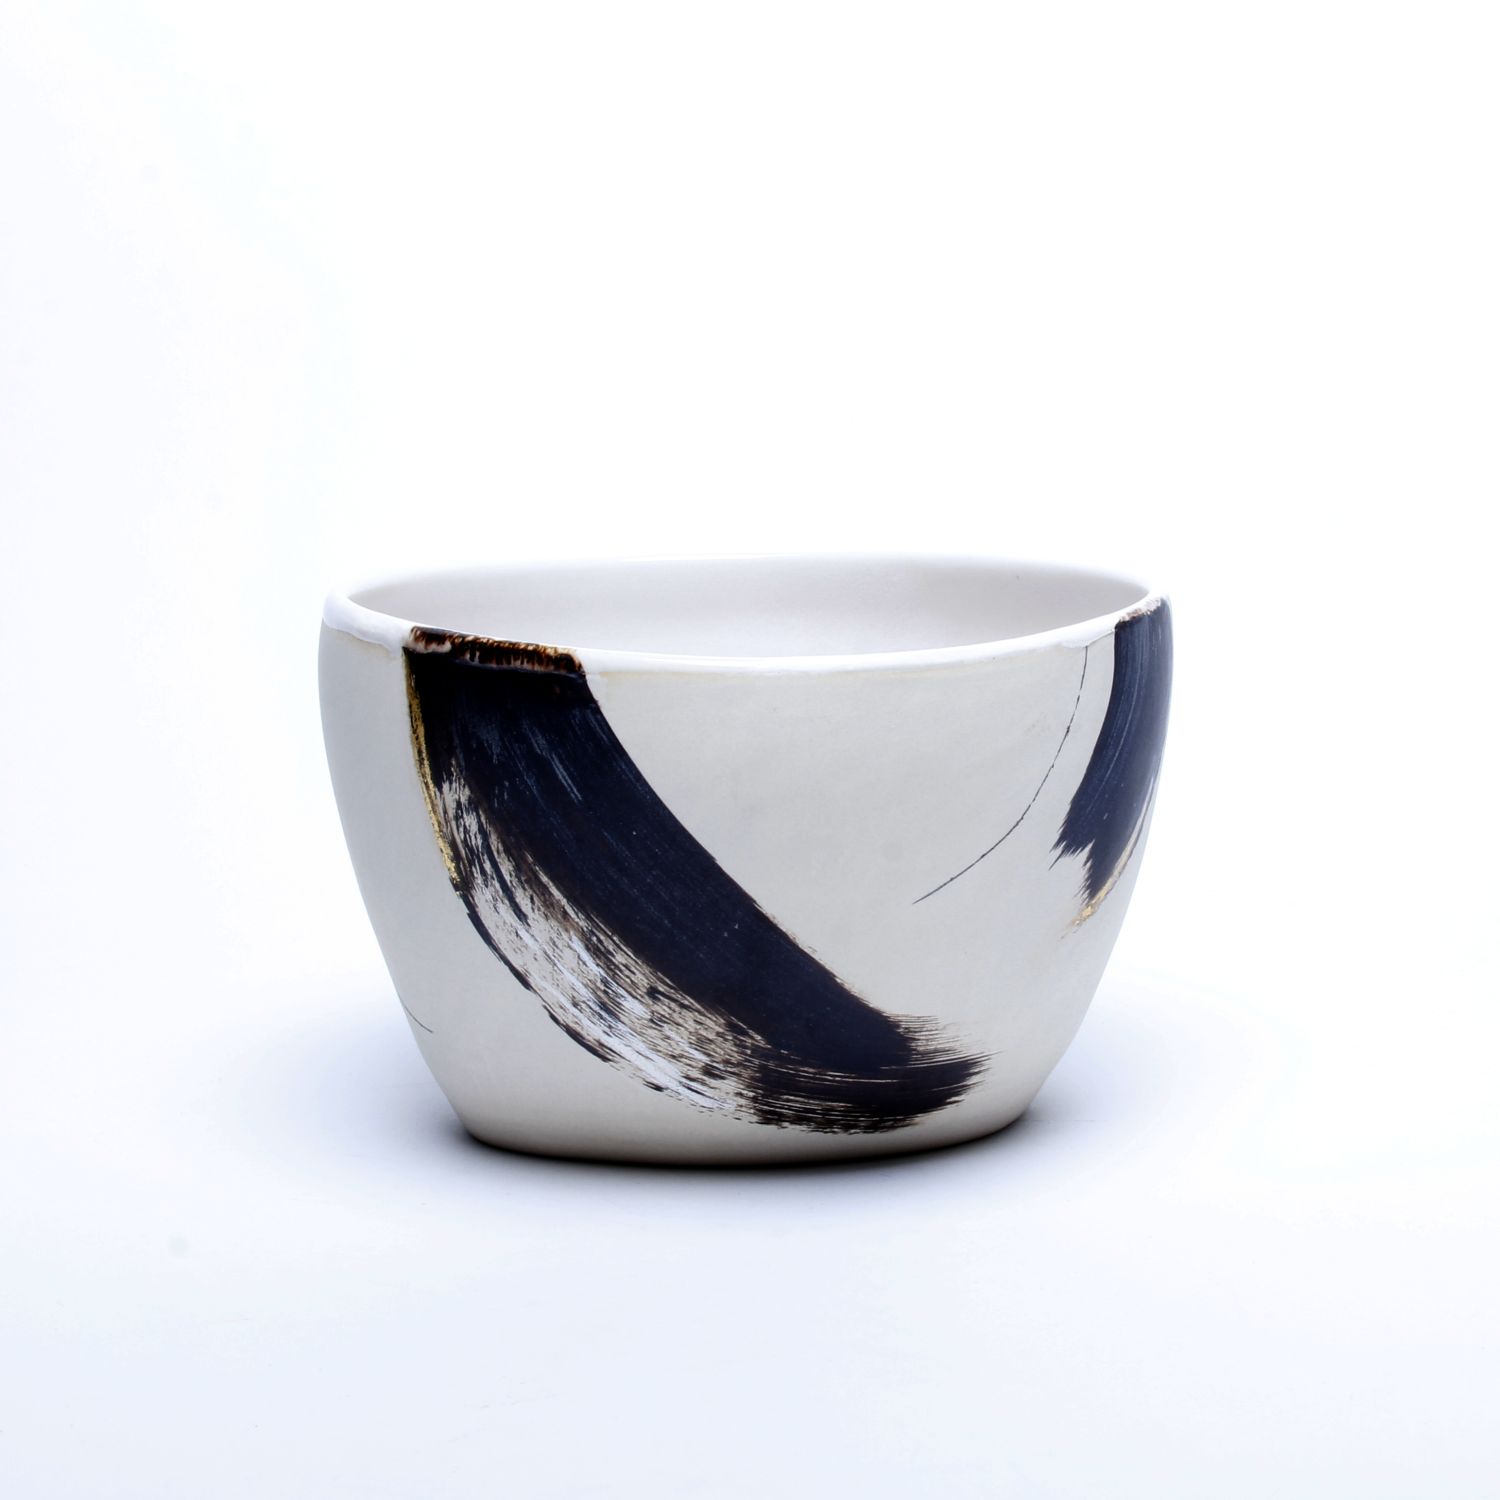 Jane Wilson: Large Black and White Bowl Product Image 2 of 4